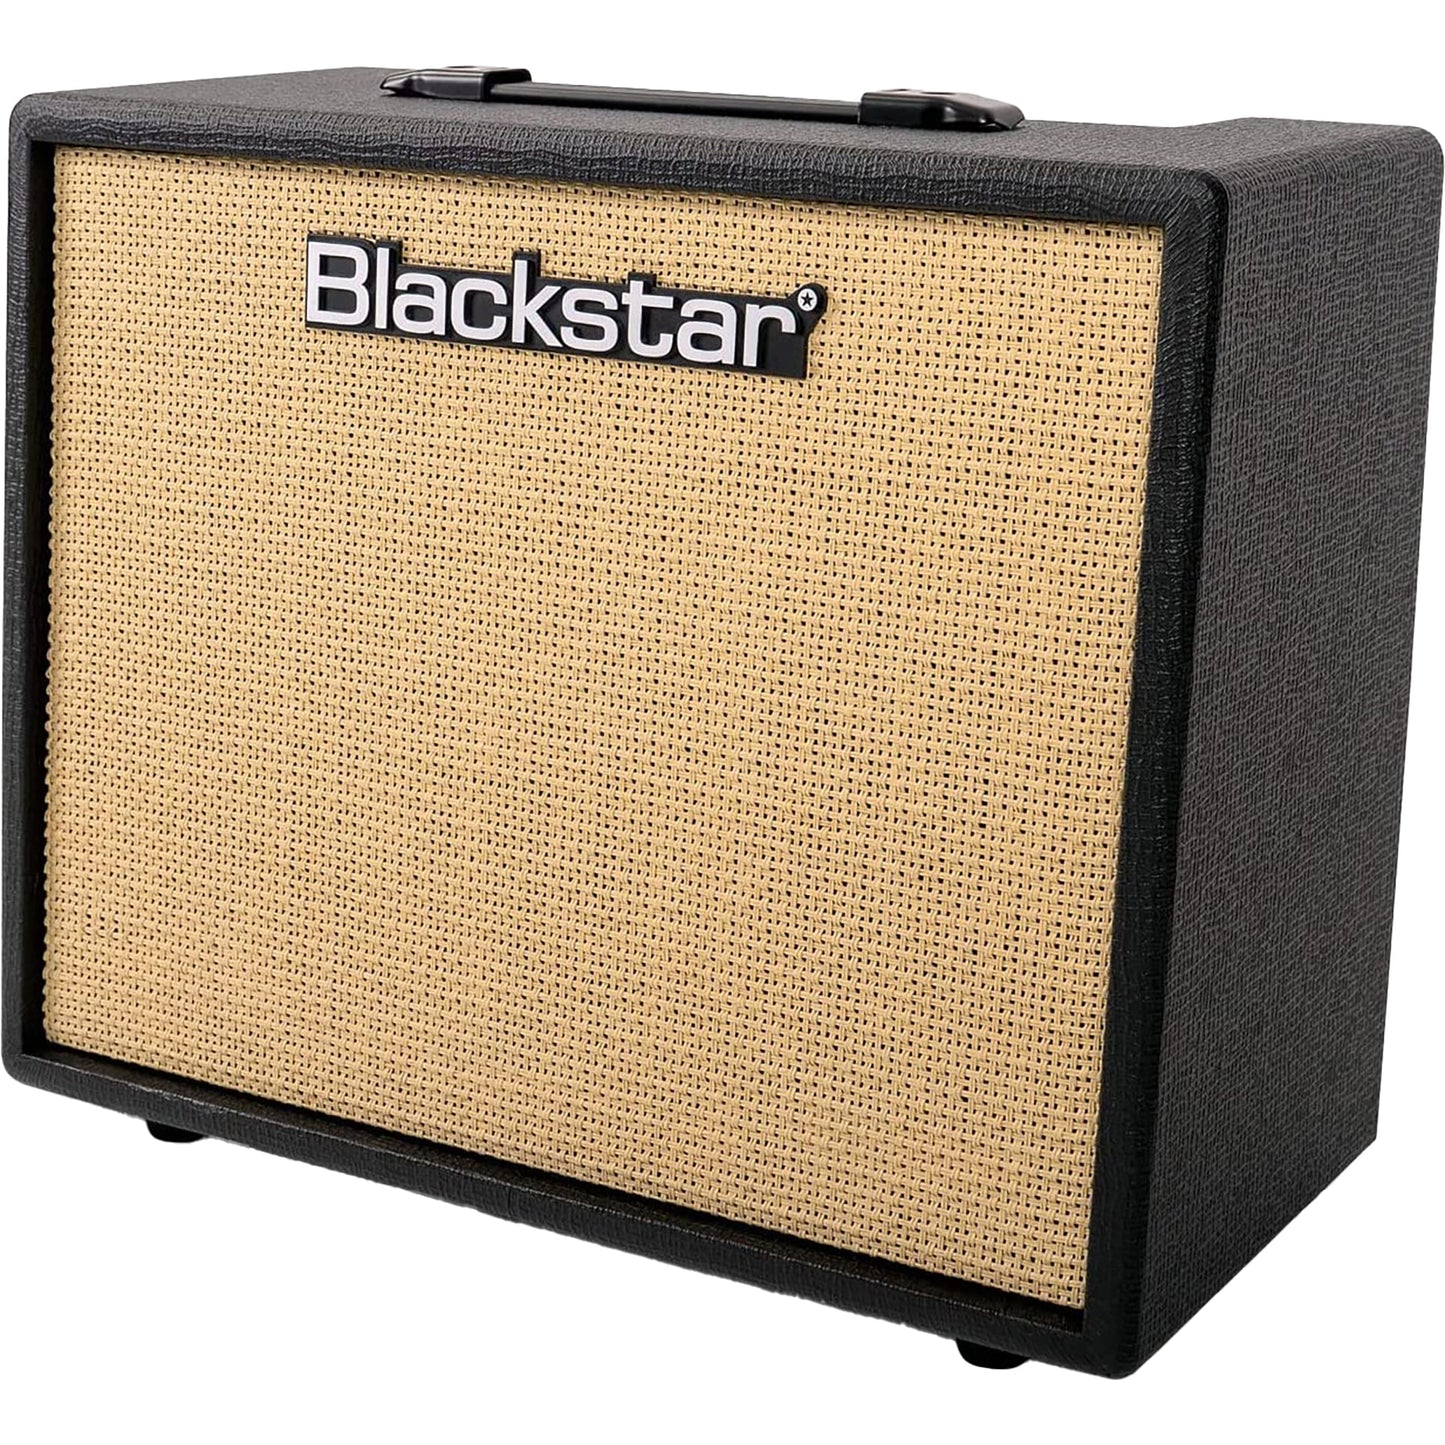 Blackstar DEBUT 50R 50W 1x12 Combo Amp, Black